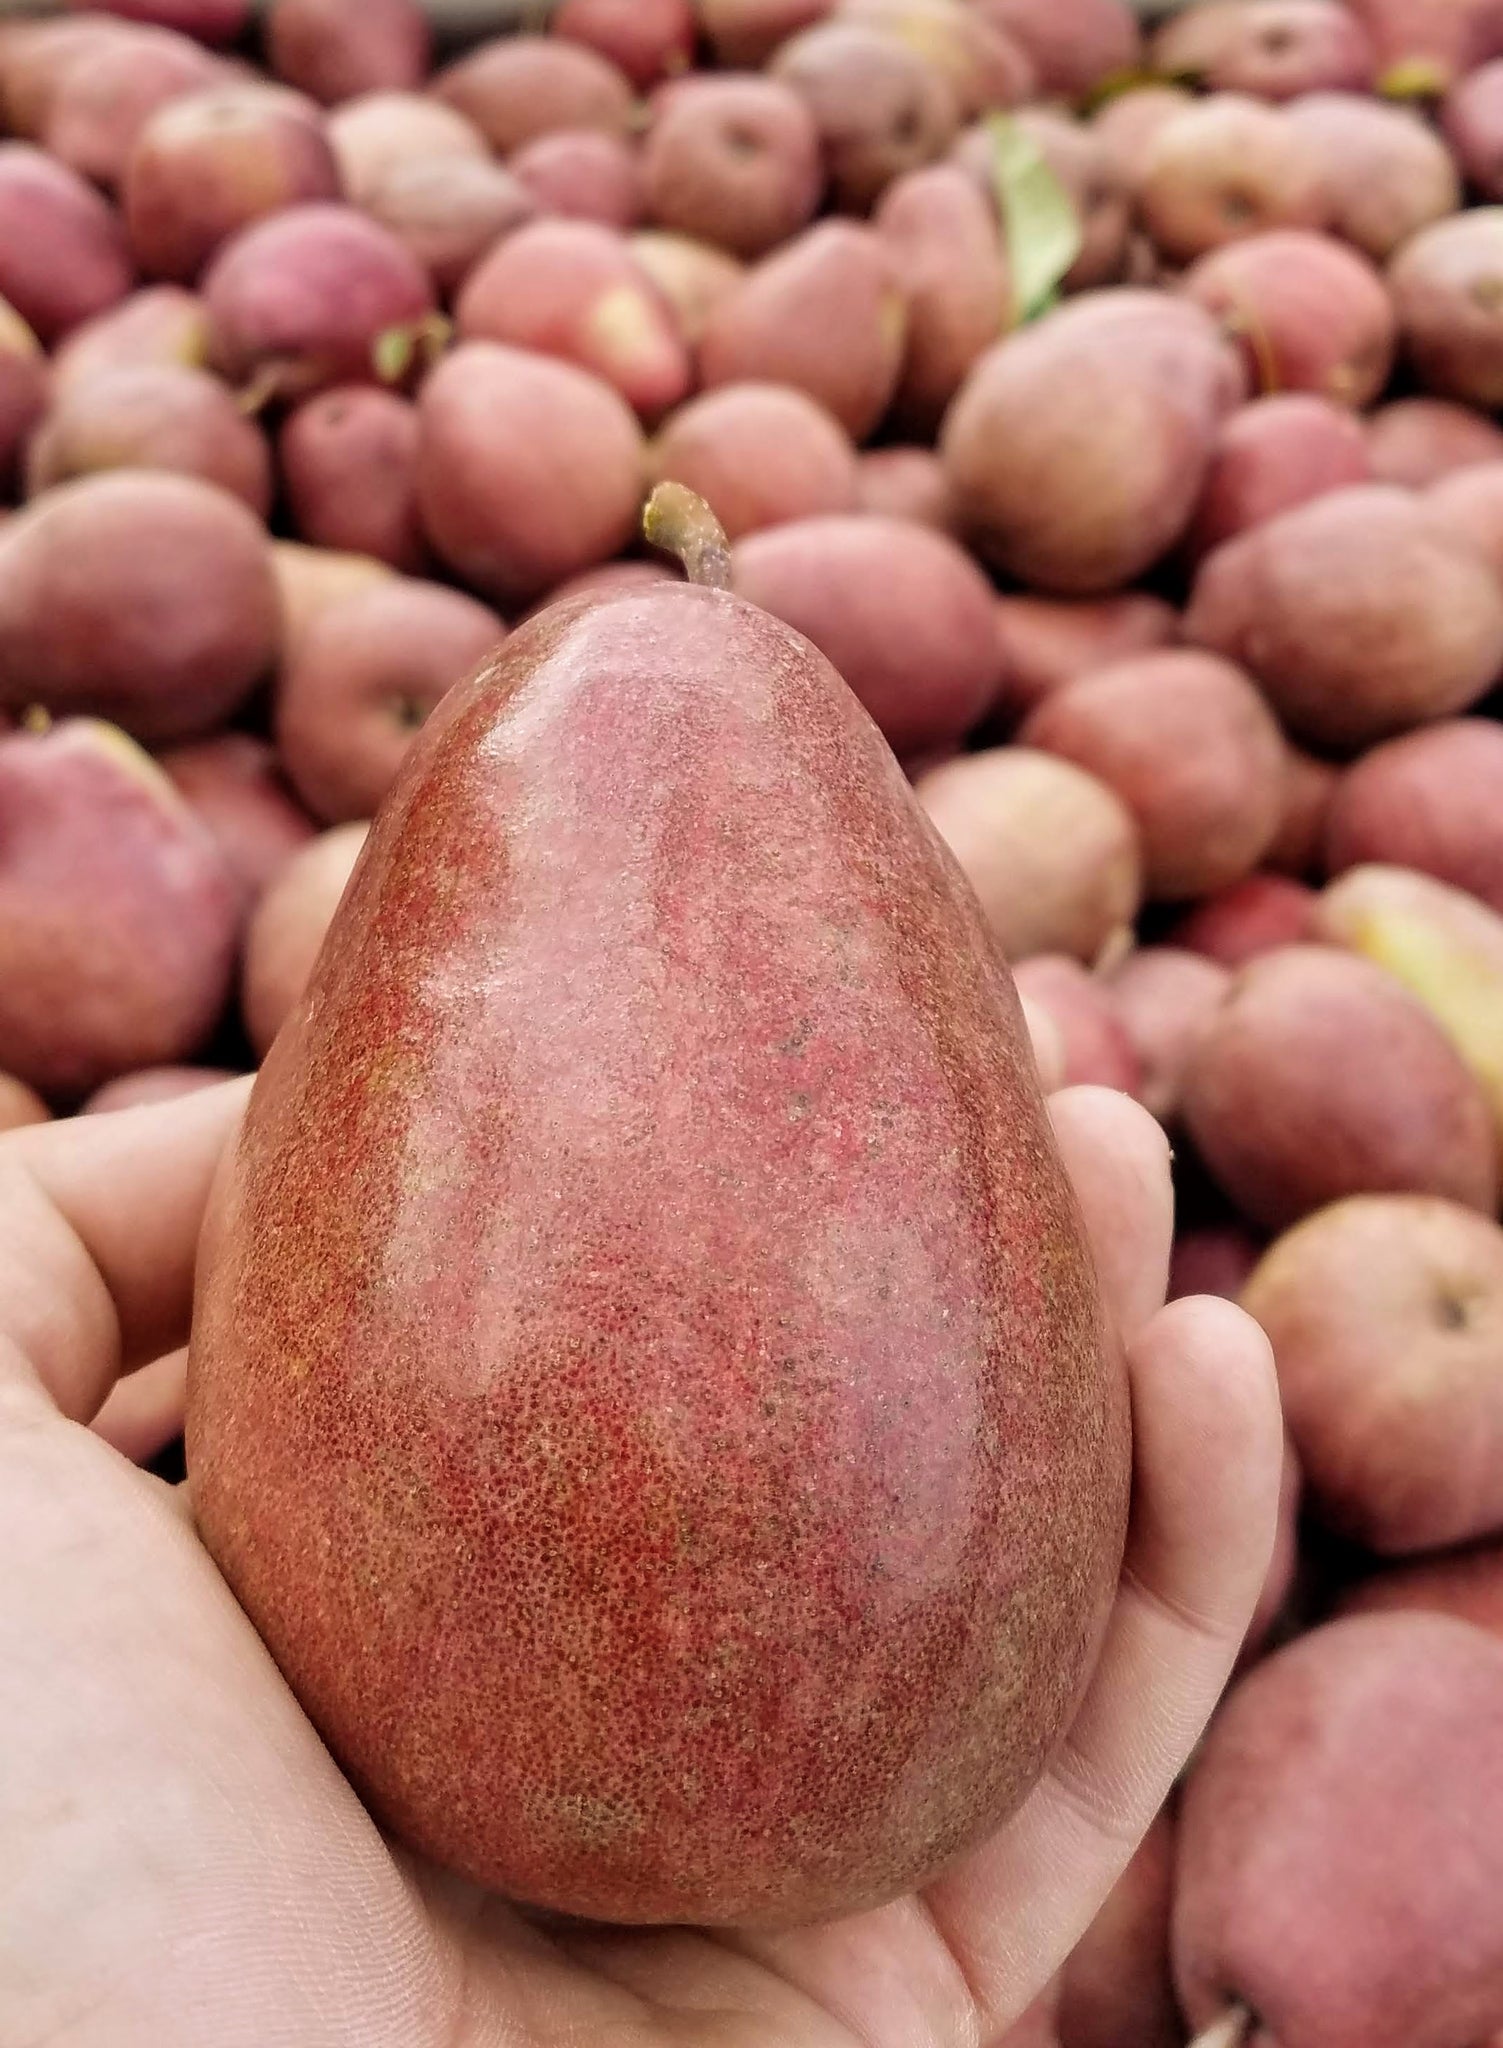 Fresh Organic Anjou Pears, 2 lb Bag 